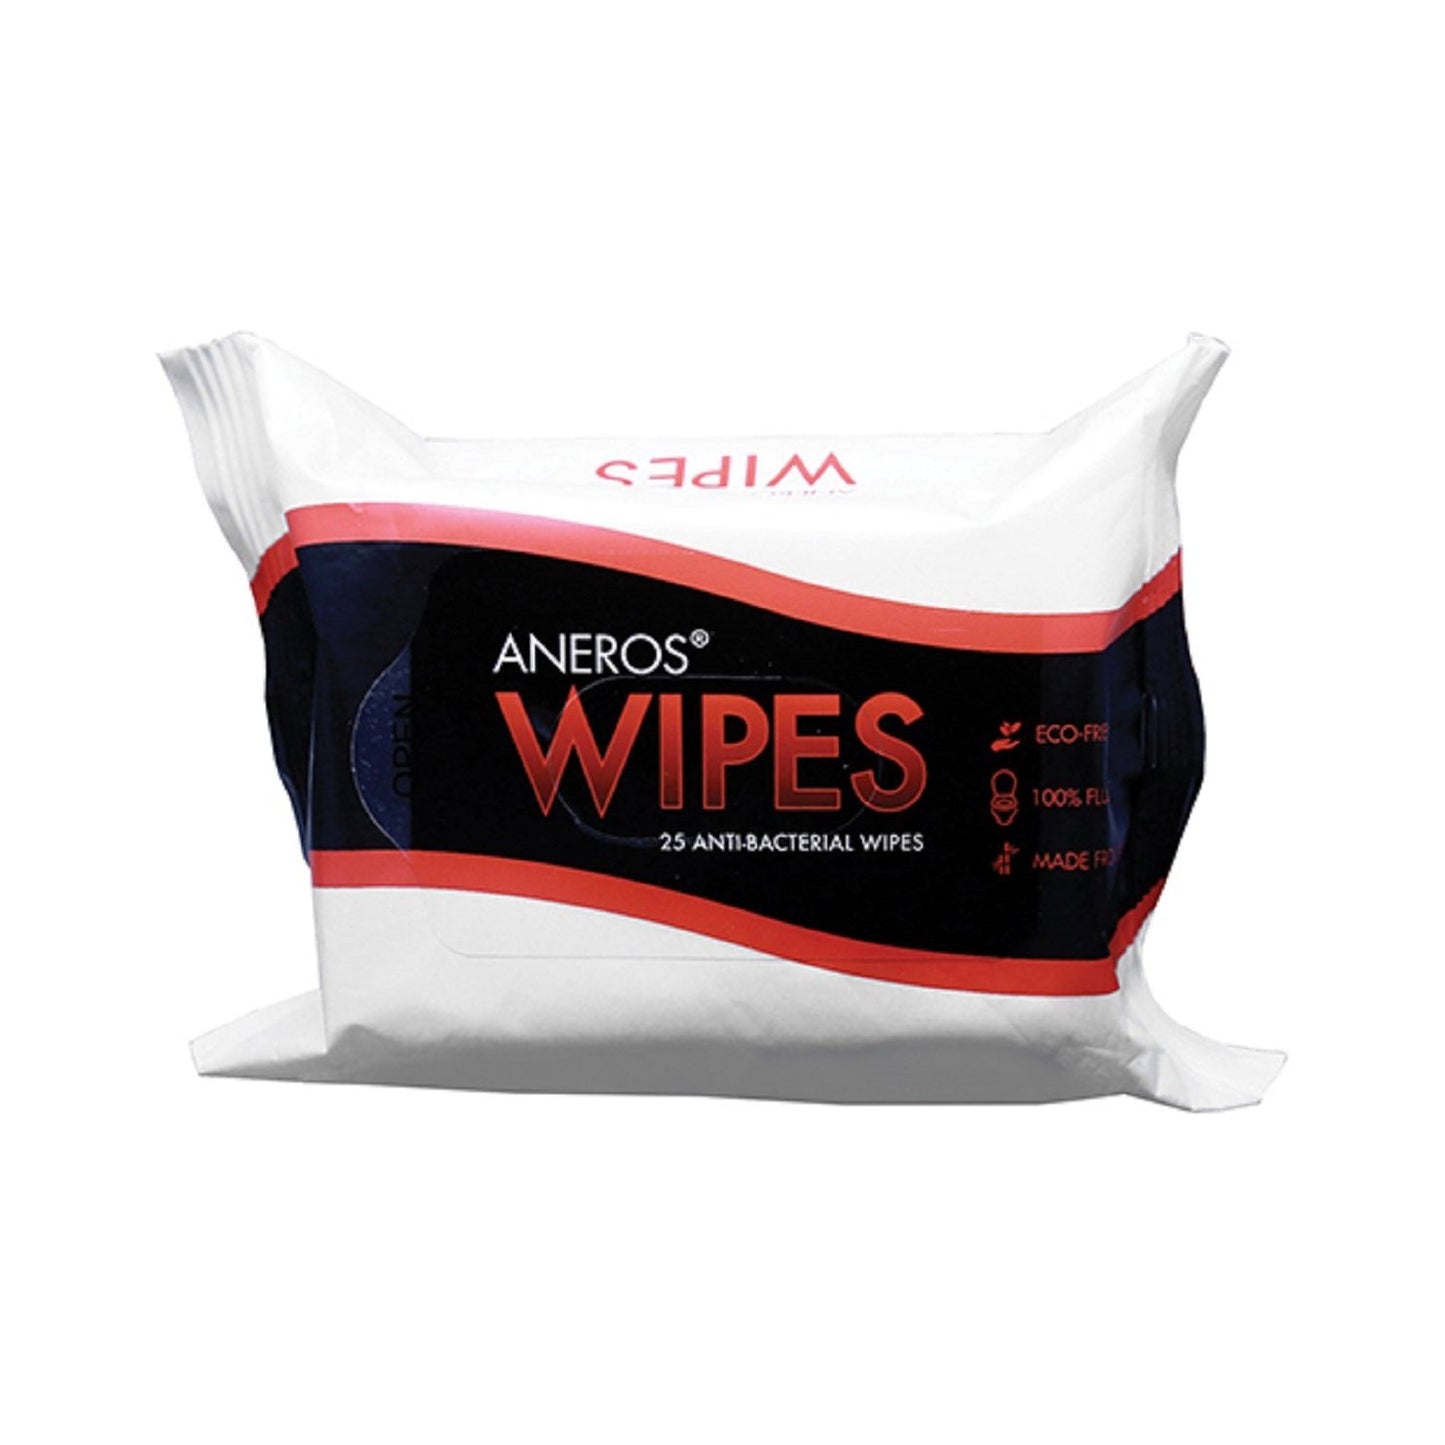 Aneros Anti-Bacterial Wipes